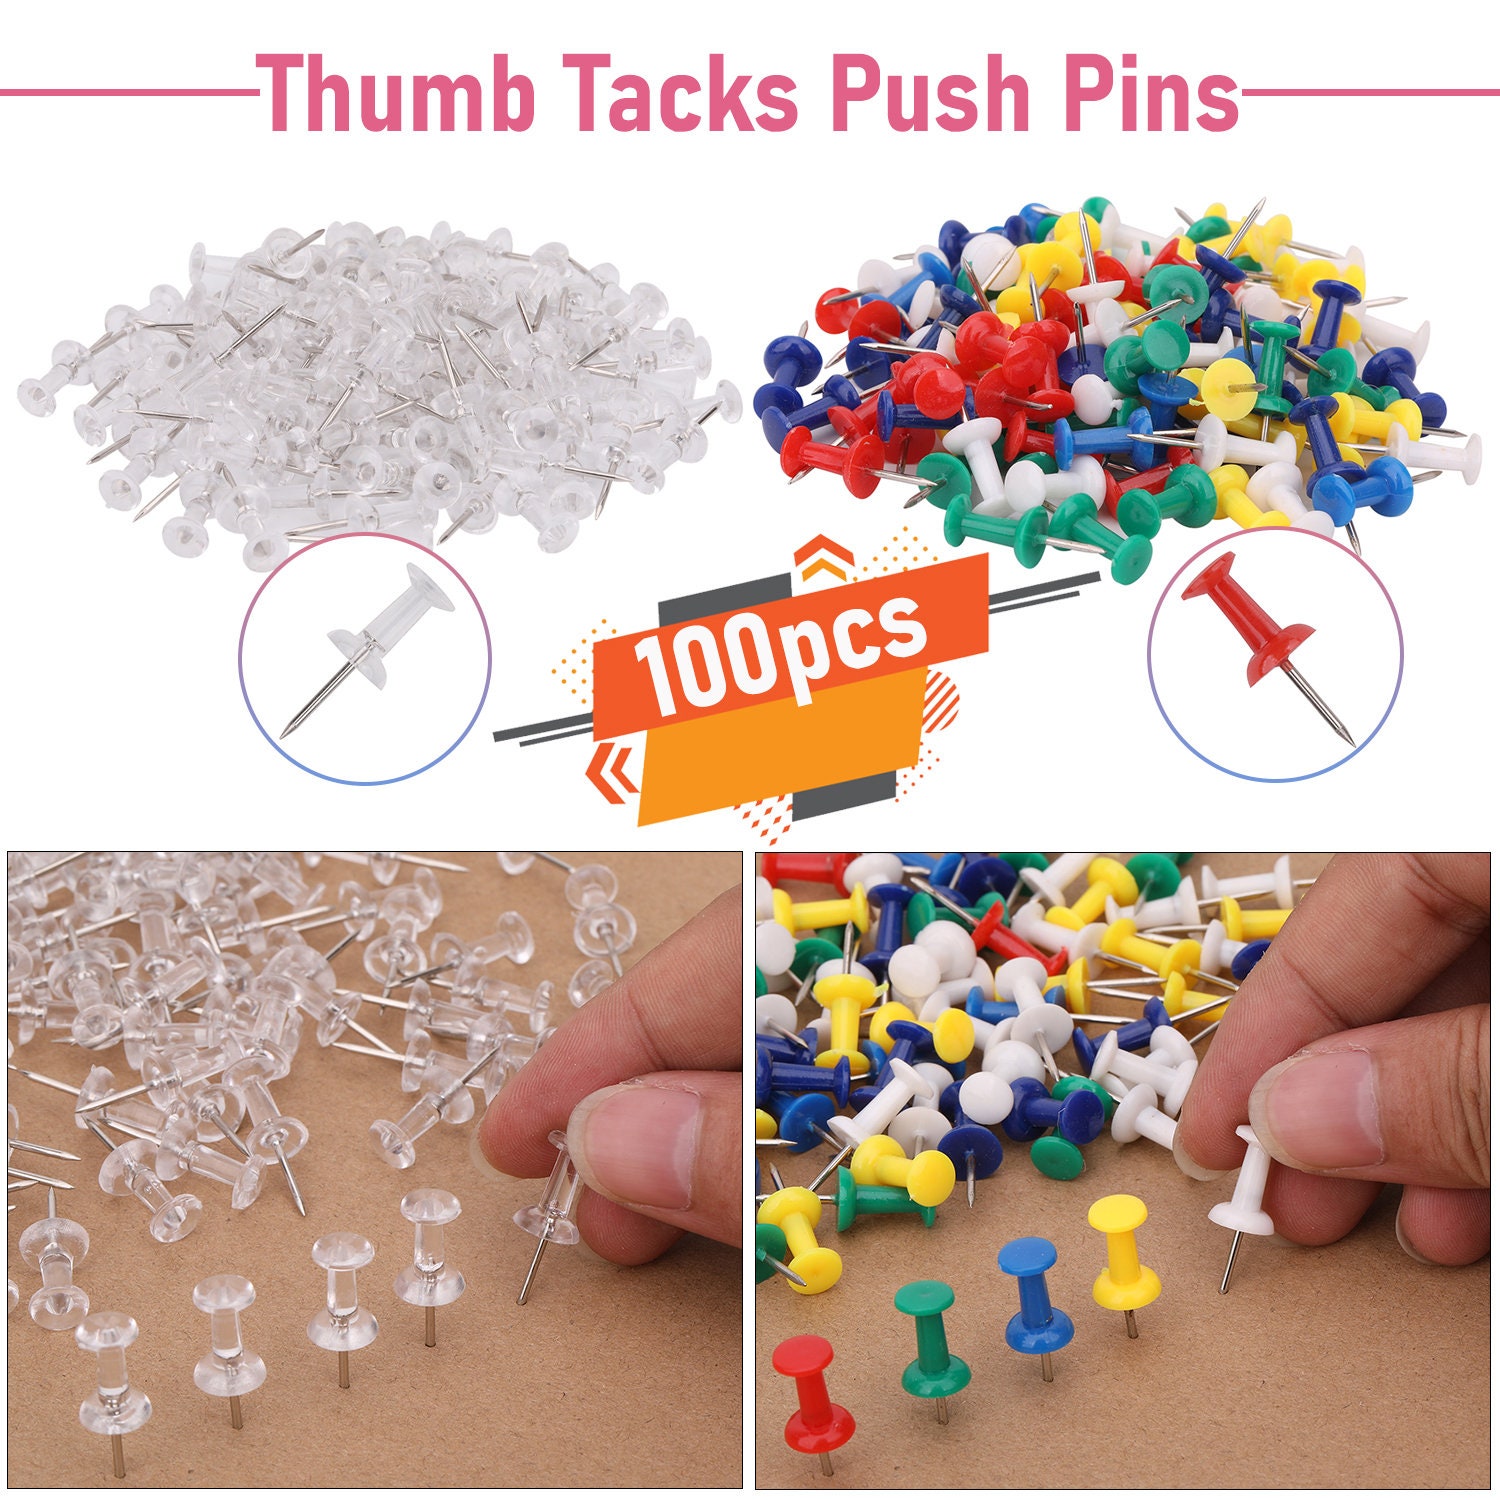 100PCS Spherical Clear Push Pins, Plastic Thumb Tacks for Wall